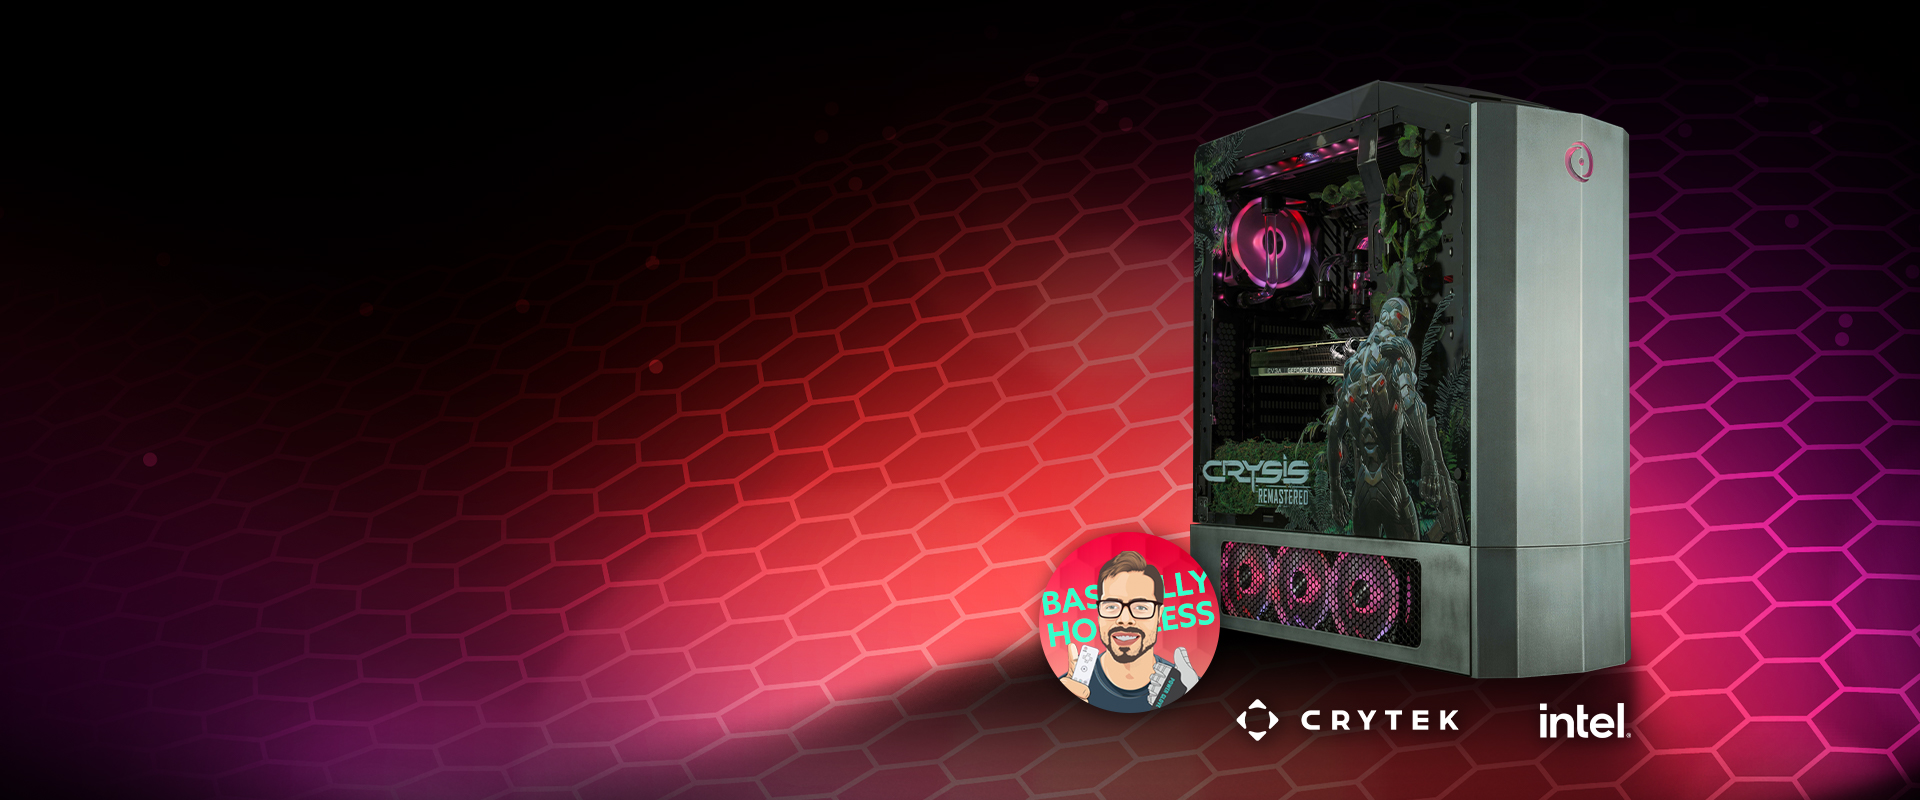 Crysis Remastered Themed ORIGIN PC Genesis Gaming Desktop Giveaway